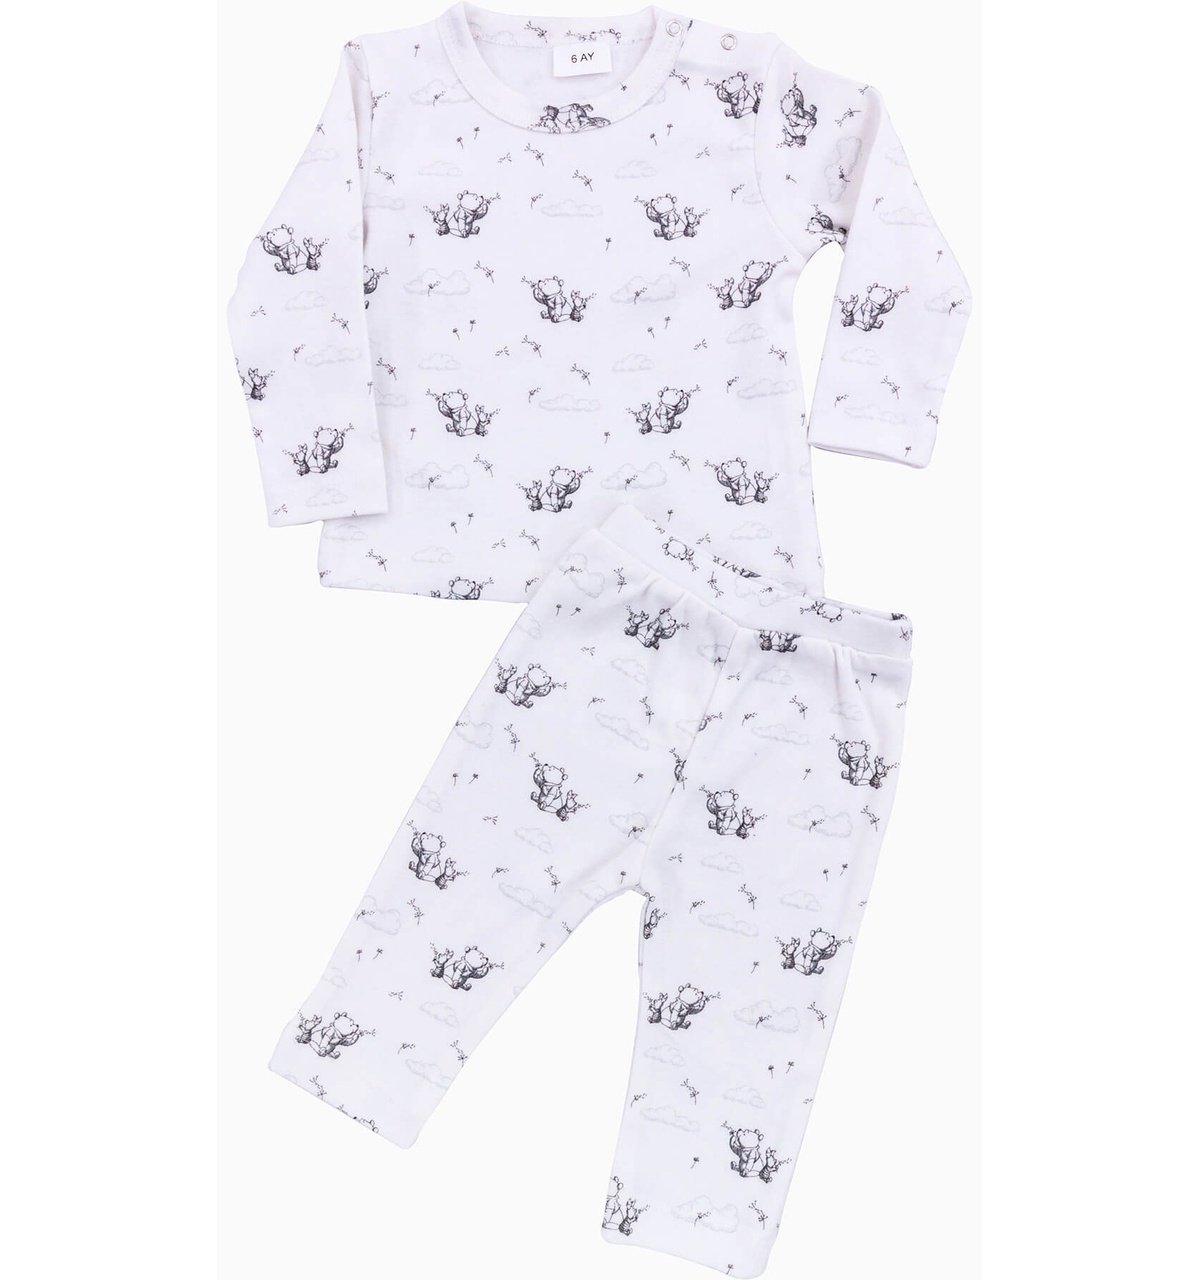 Winni Pooh Bebek Pijama Takımı - Renkli